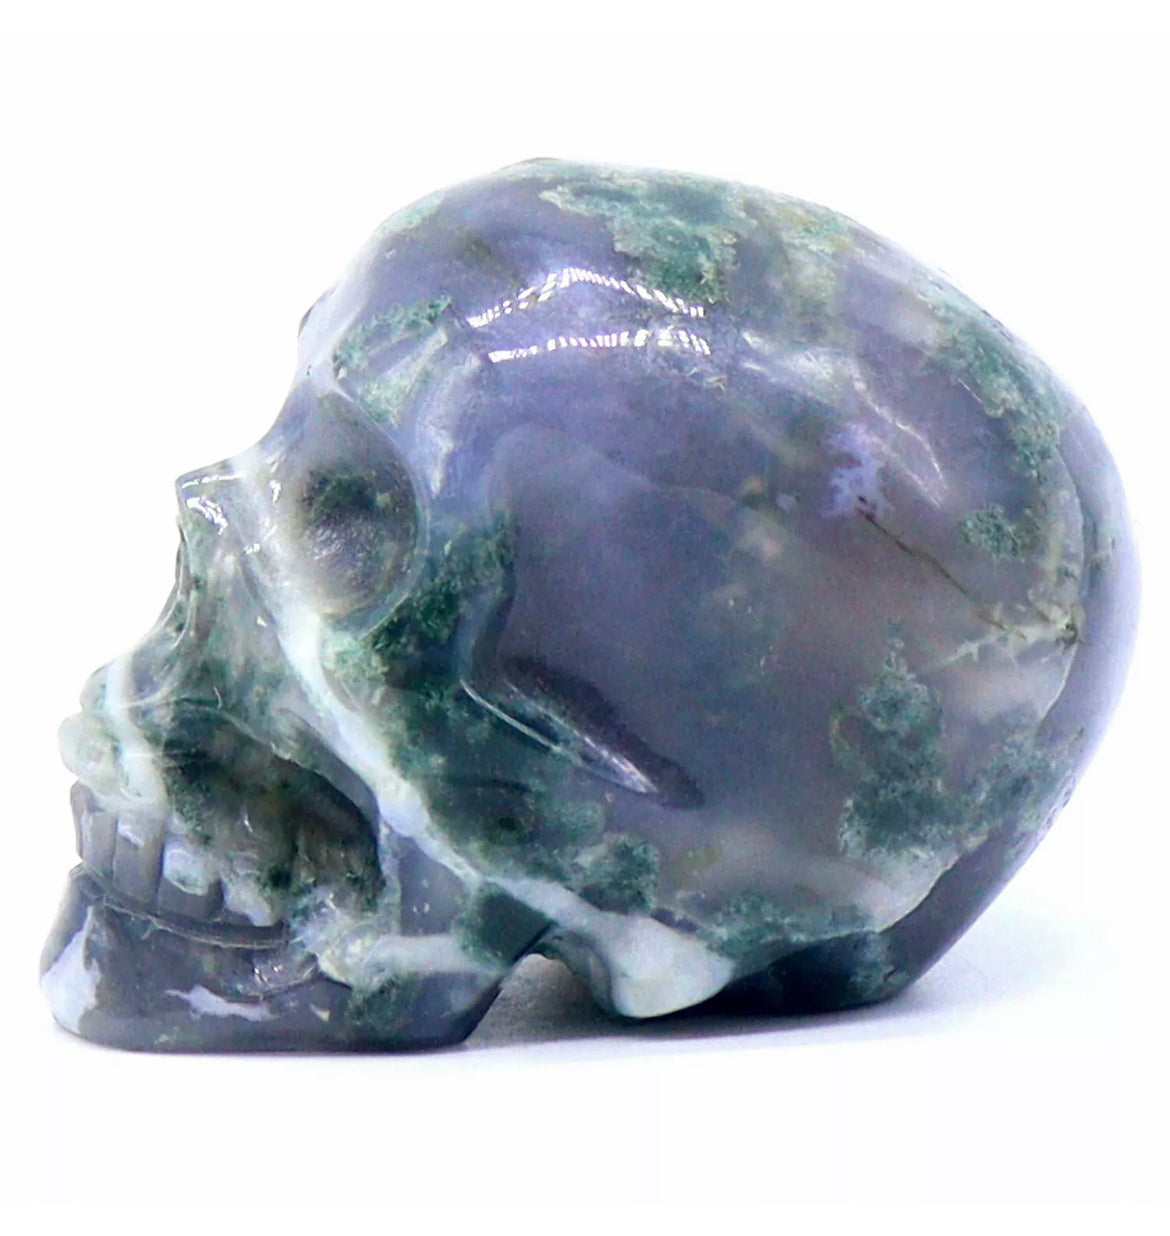 Moss Agate gemstone skull figurine